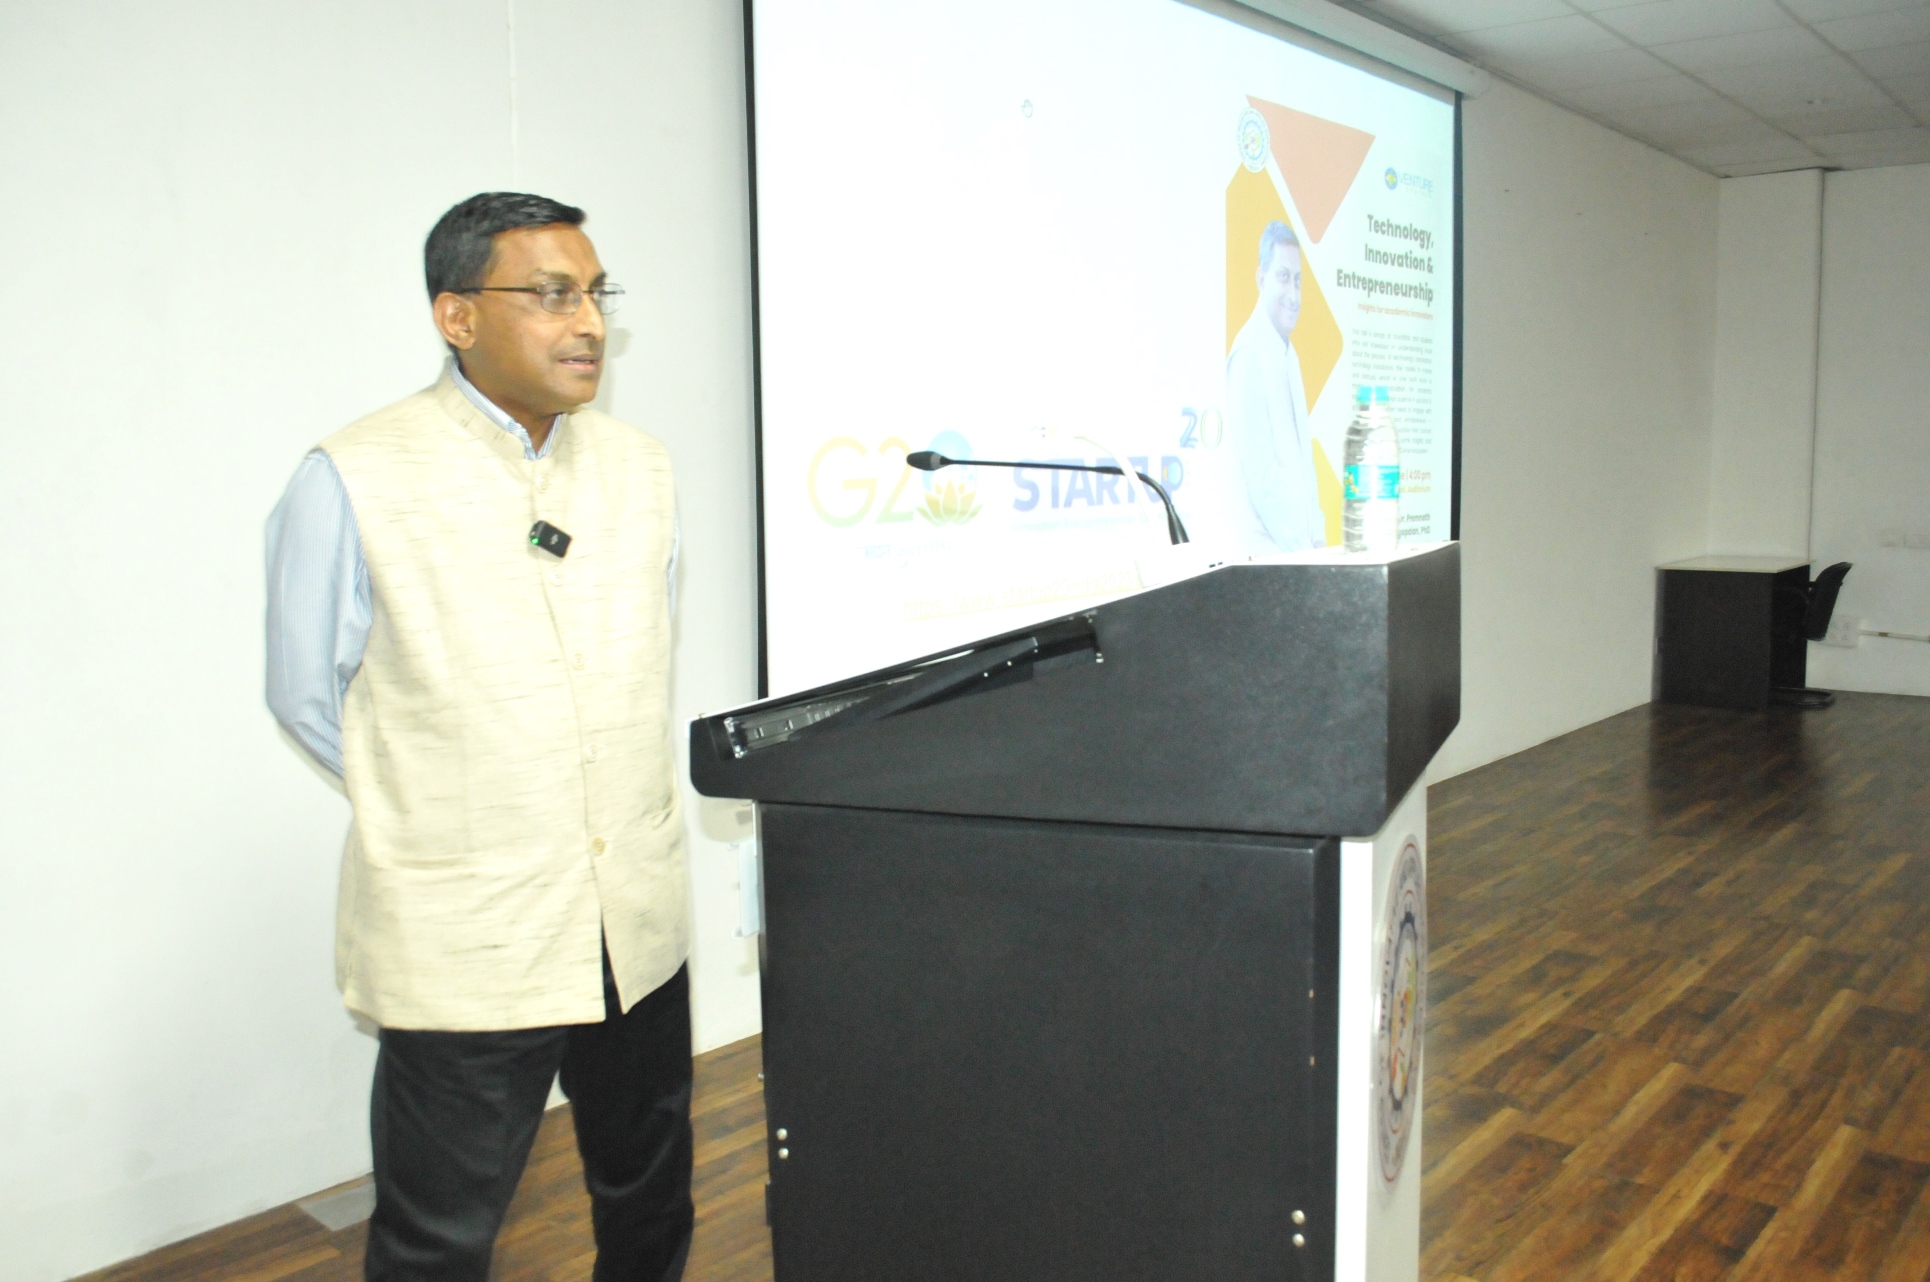 Invited talk by Dr. Premnath Venugopalan